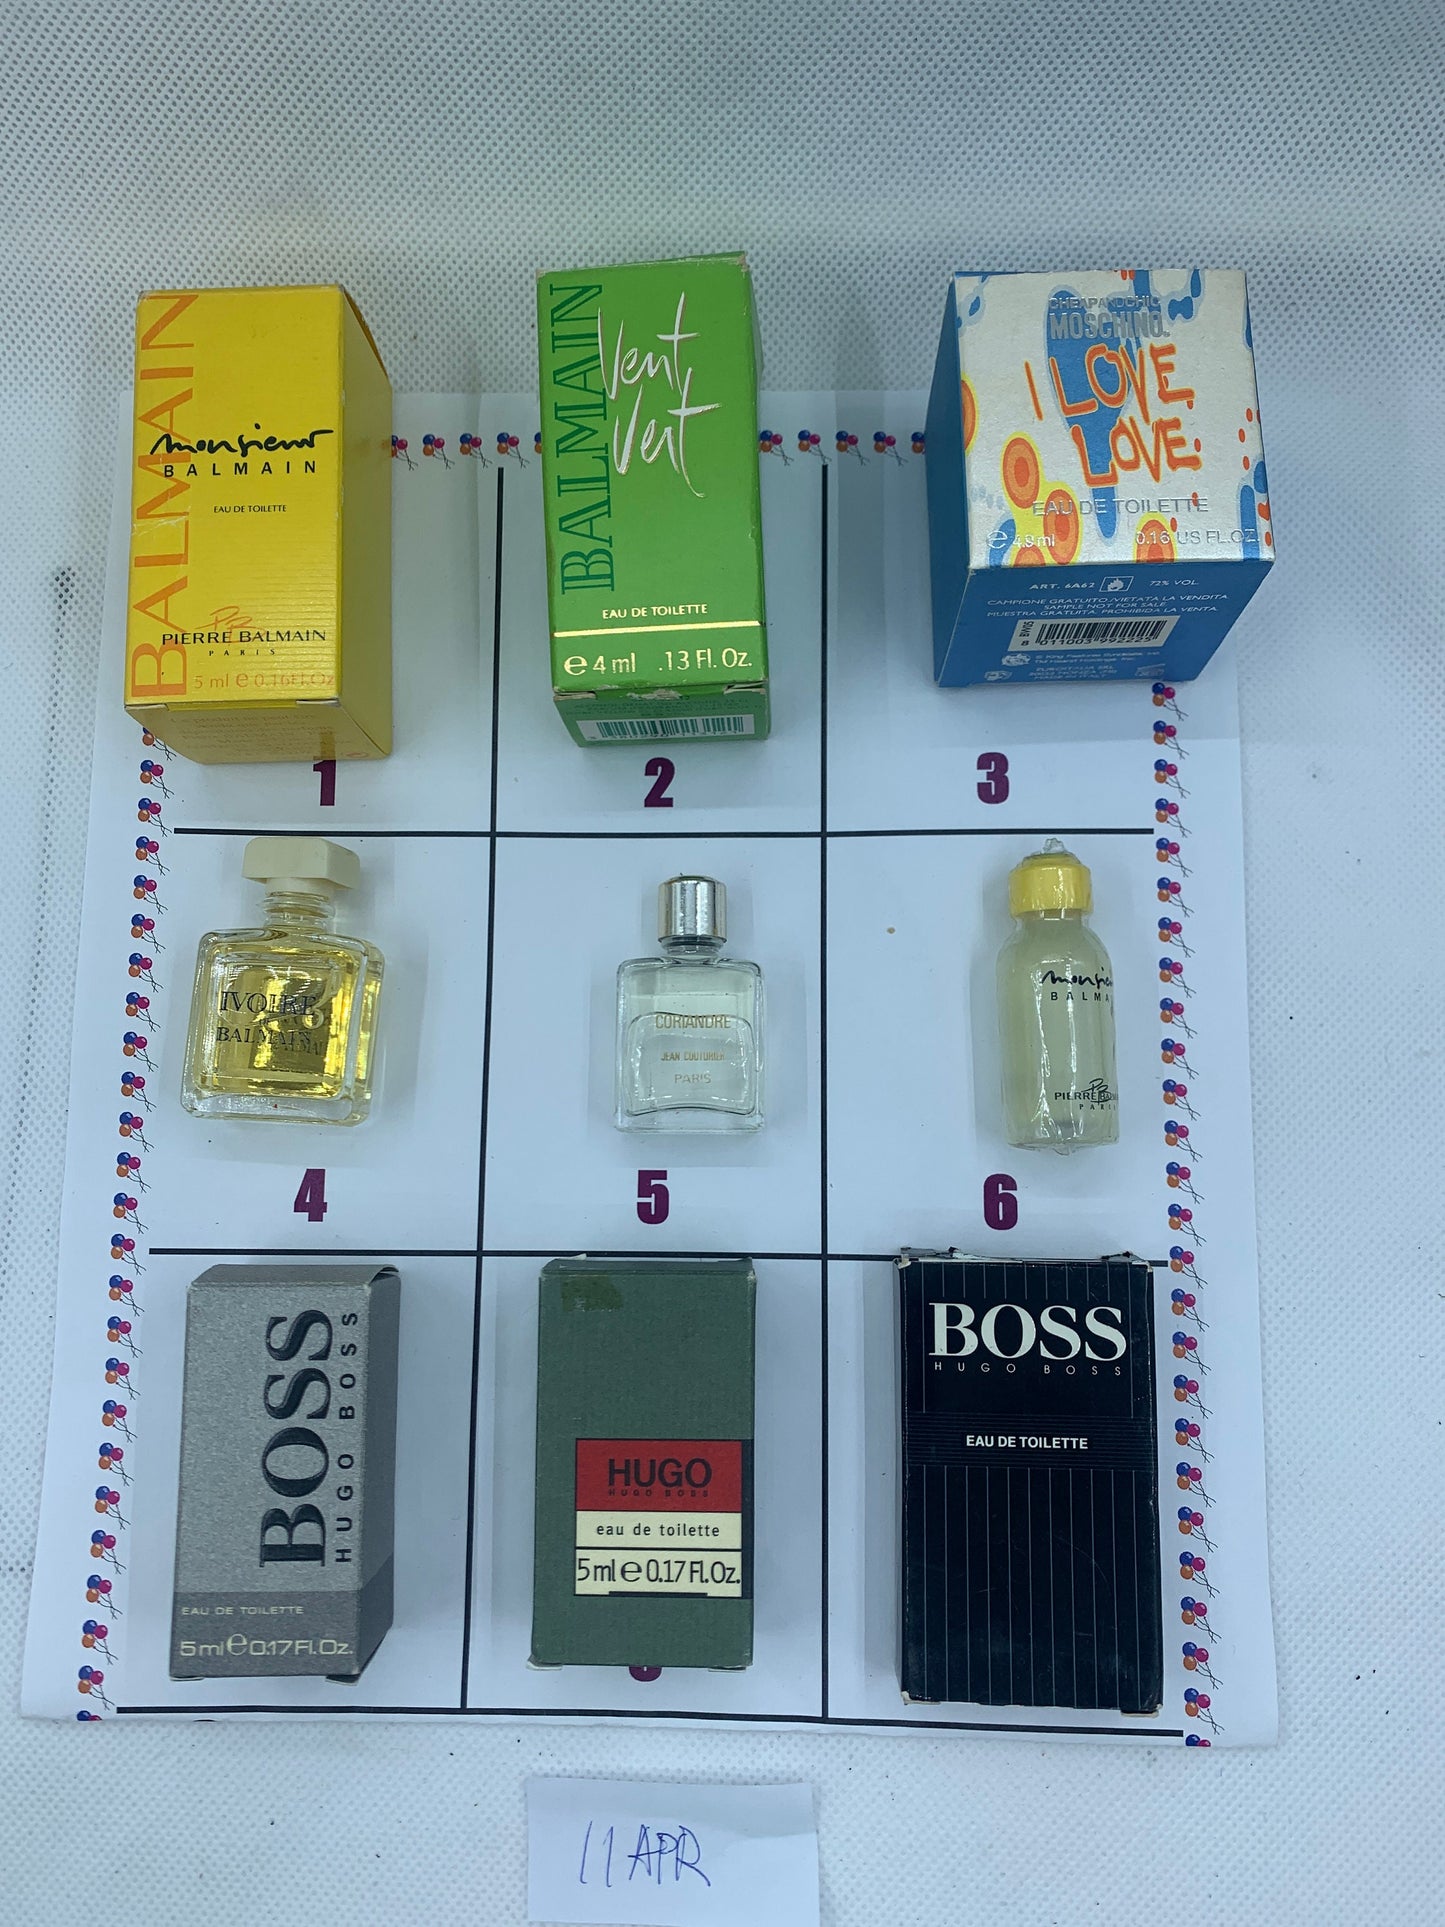 Balmain MOSCHINO BOSS HUGO Miniatures 5ml Edt Edp Parfum Perfume